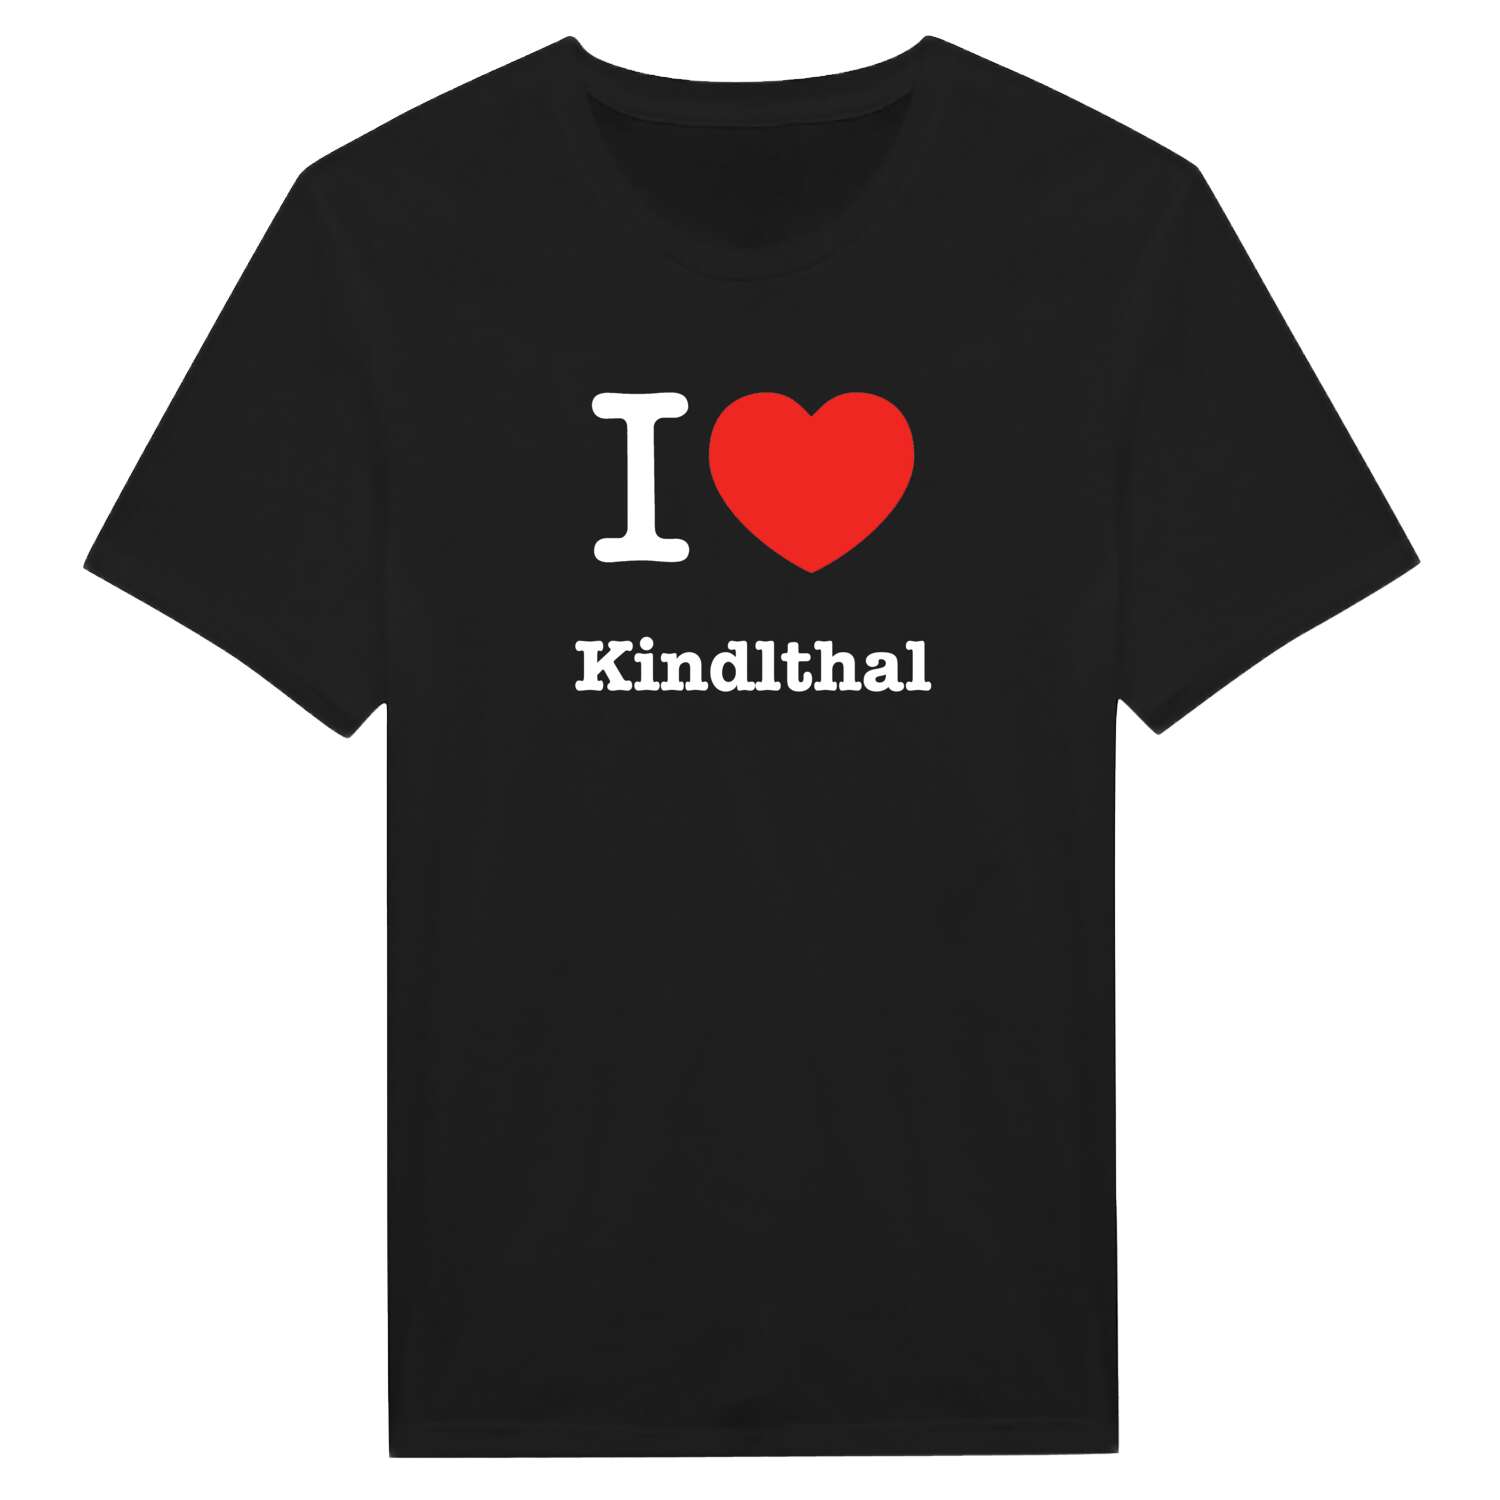 Kindlthal T-Shirt »I love«